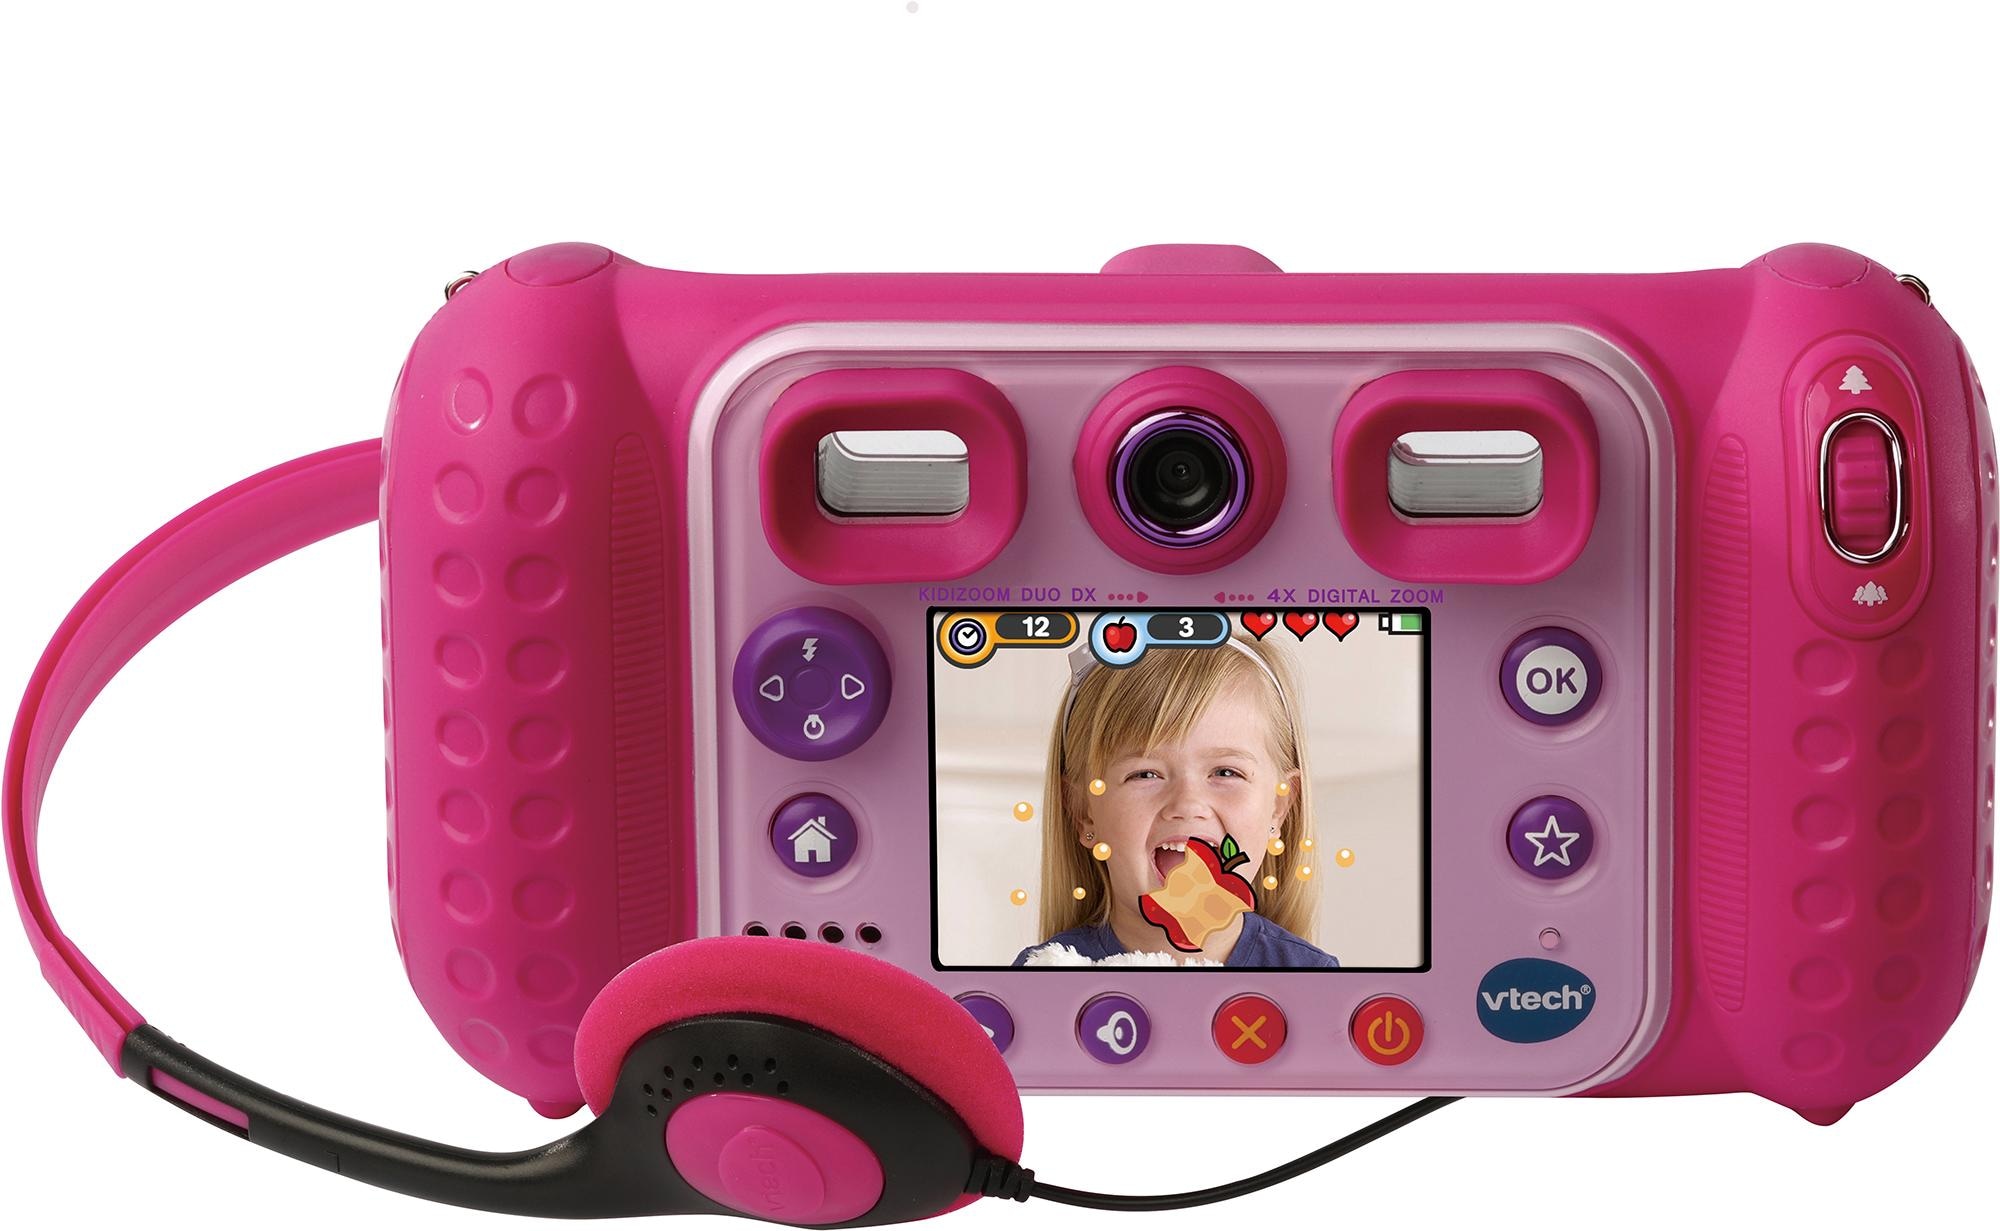 Kopfhörer 5 Kinderkamera pink«, Vtech® bei »Kidizoom inklusive jetzt DX, Duo OTTO MP,